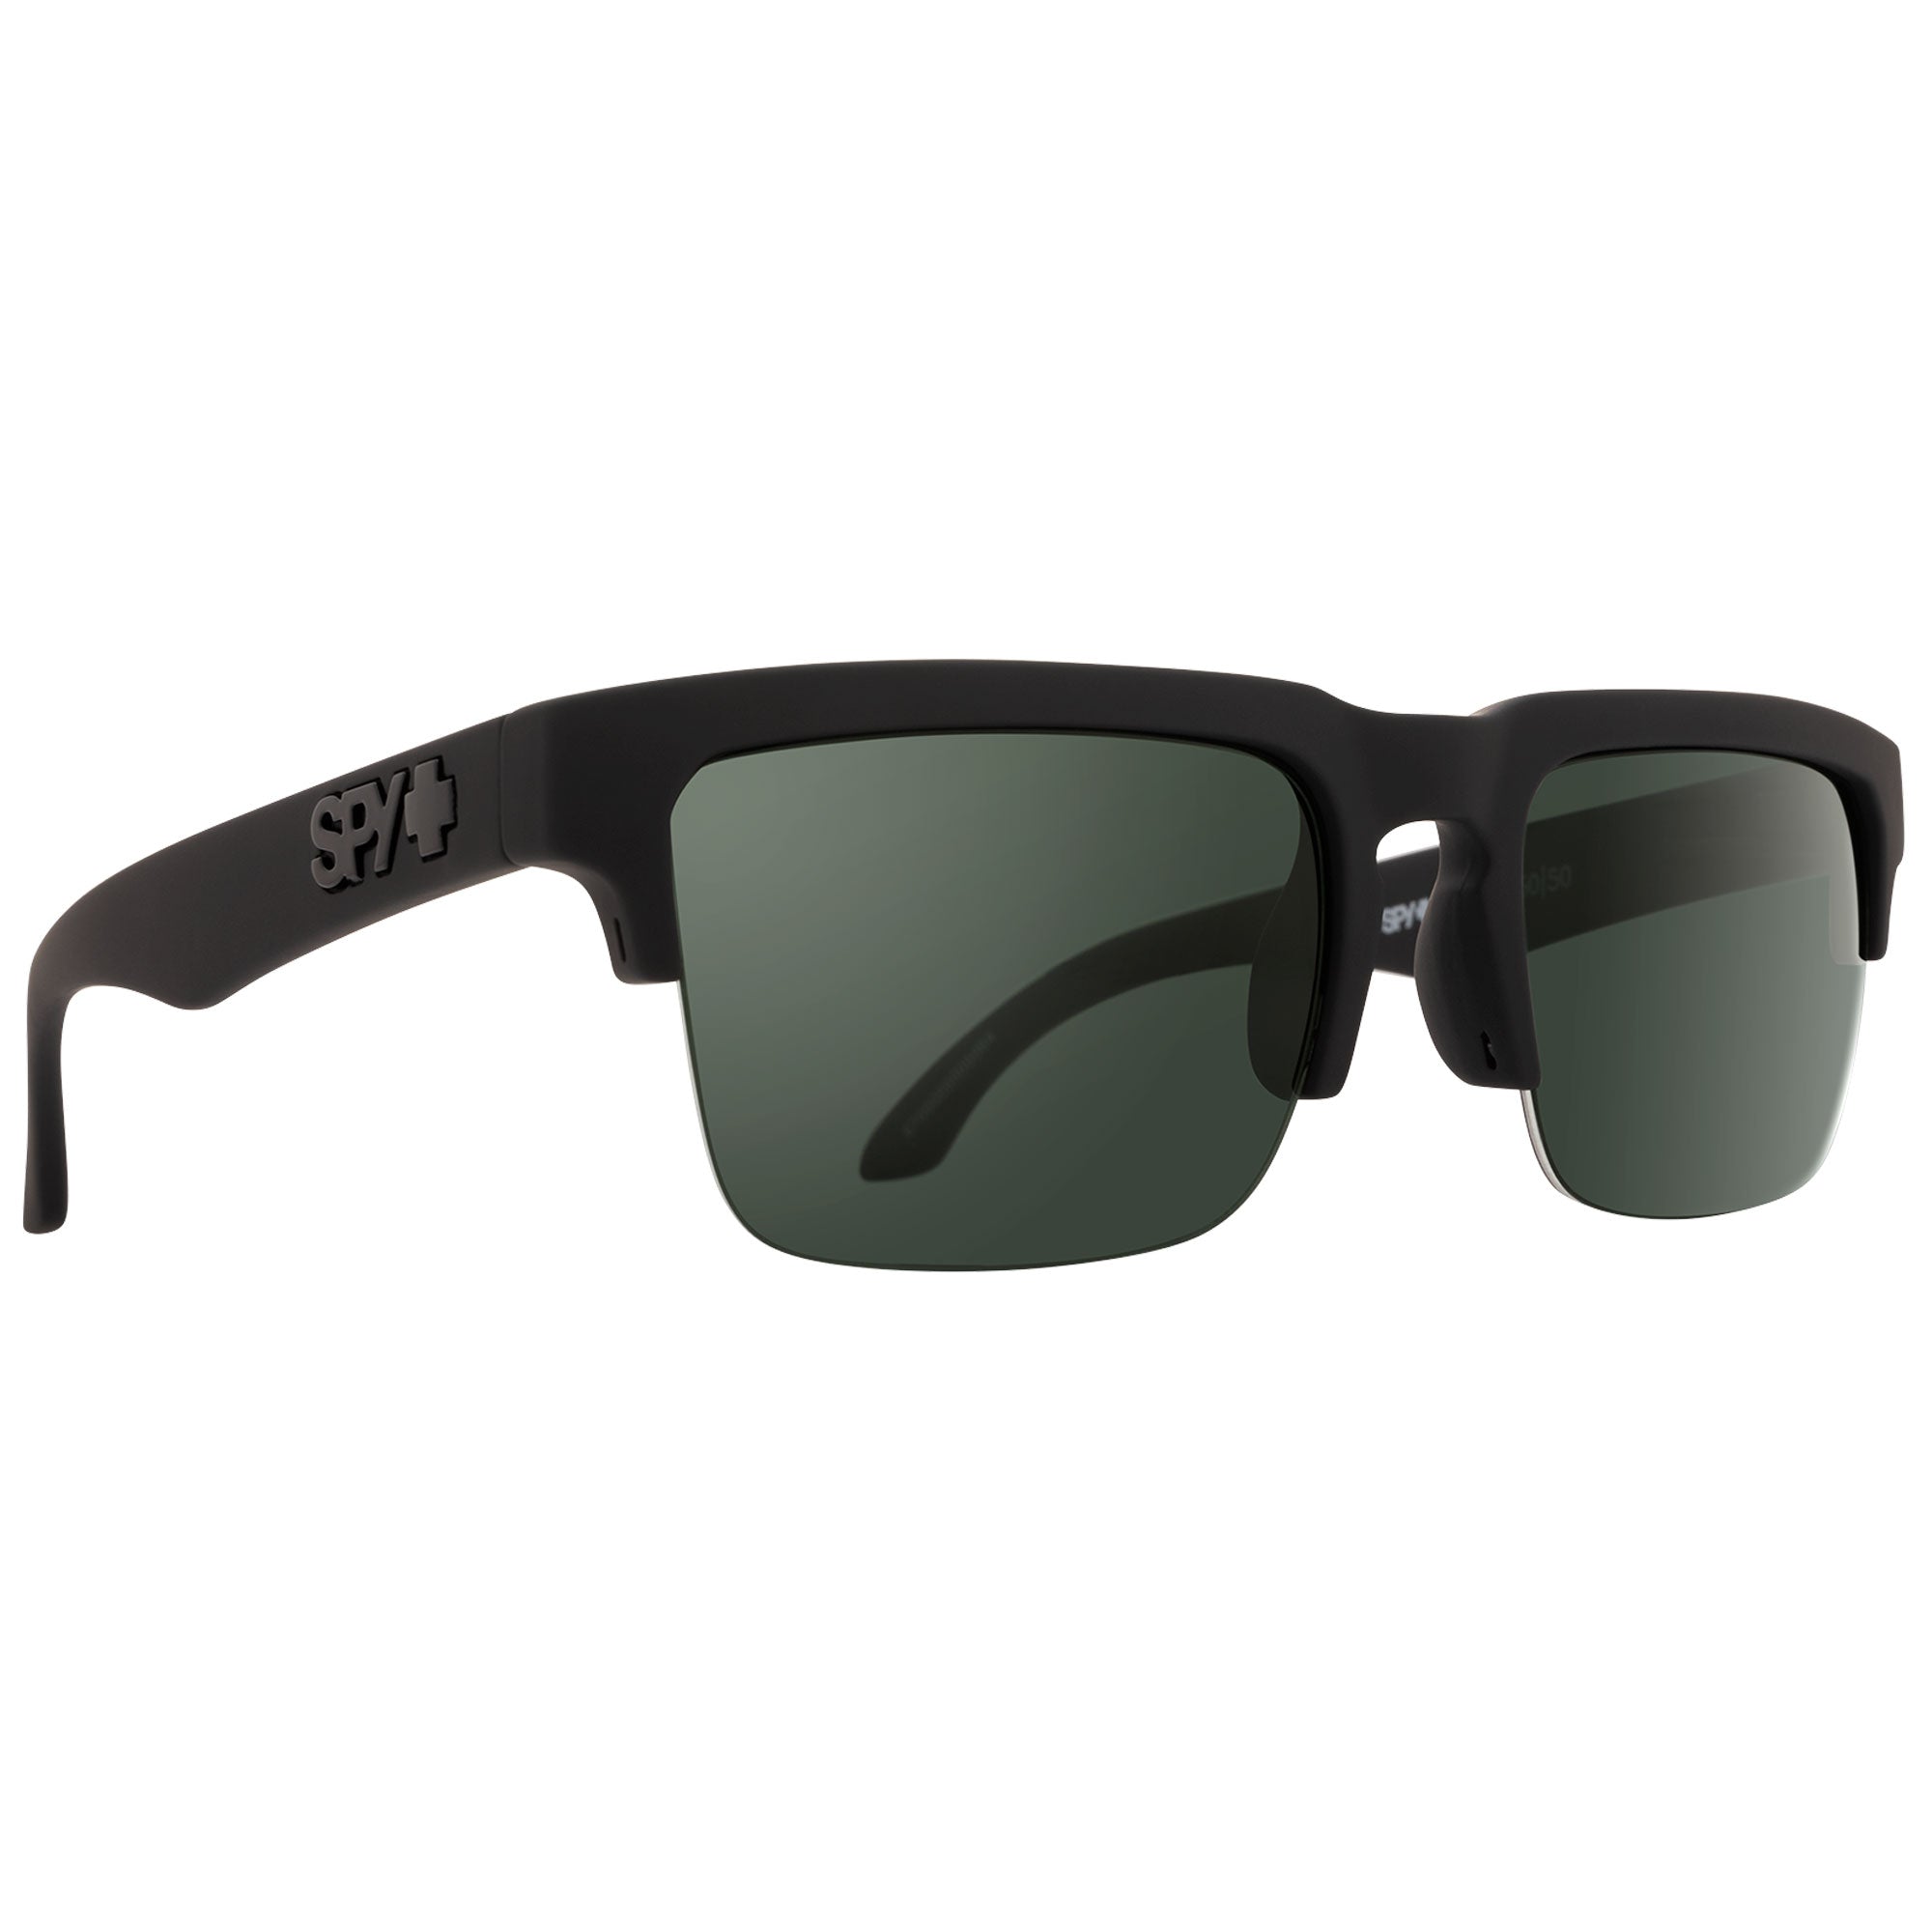 Spy Helm 5050 Men's Polarized Sunglasses